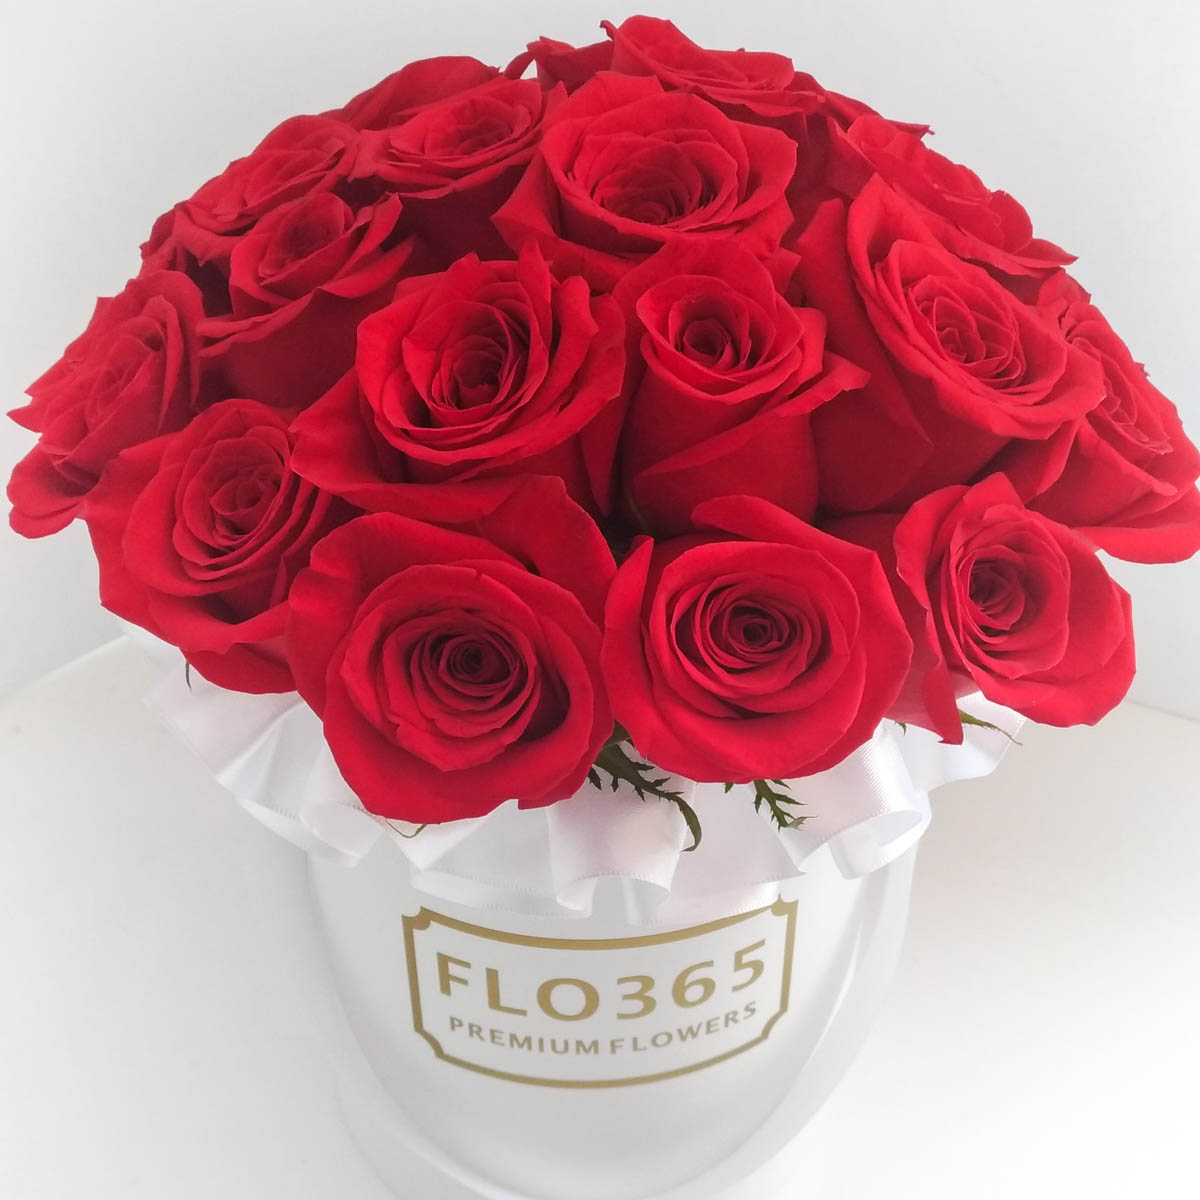 Вайт_Дебют: 25 роз в шляпной коробке - Фотография цветов перед доставкой